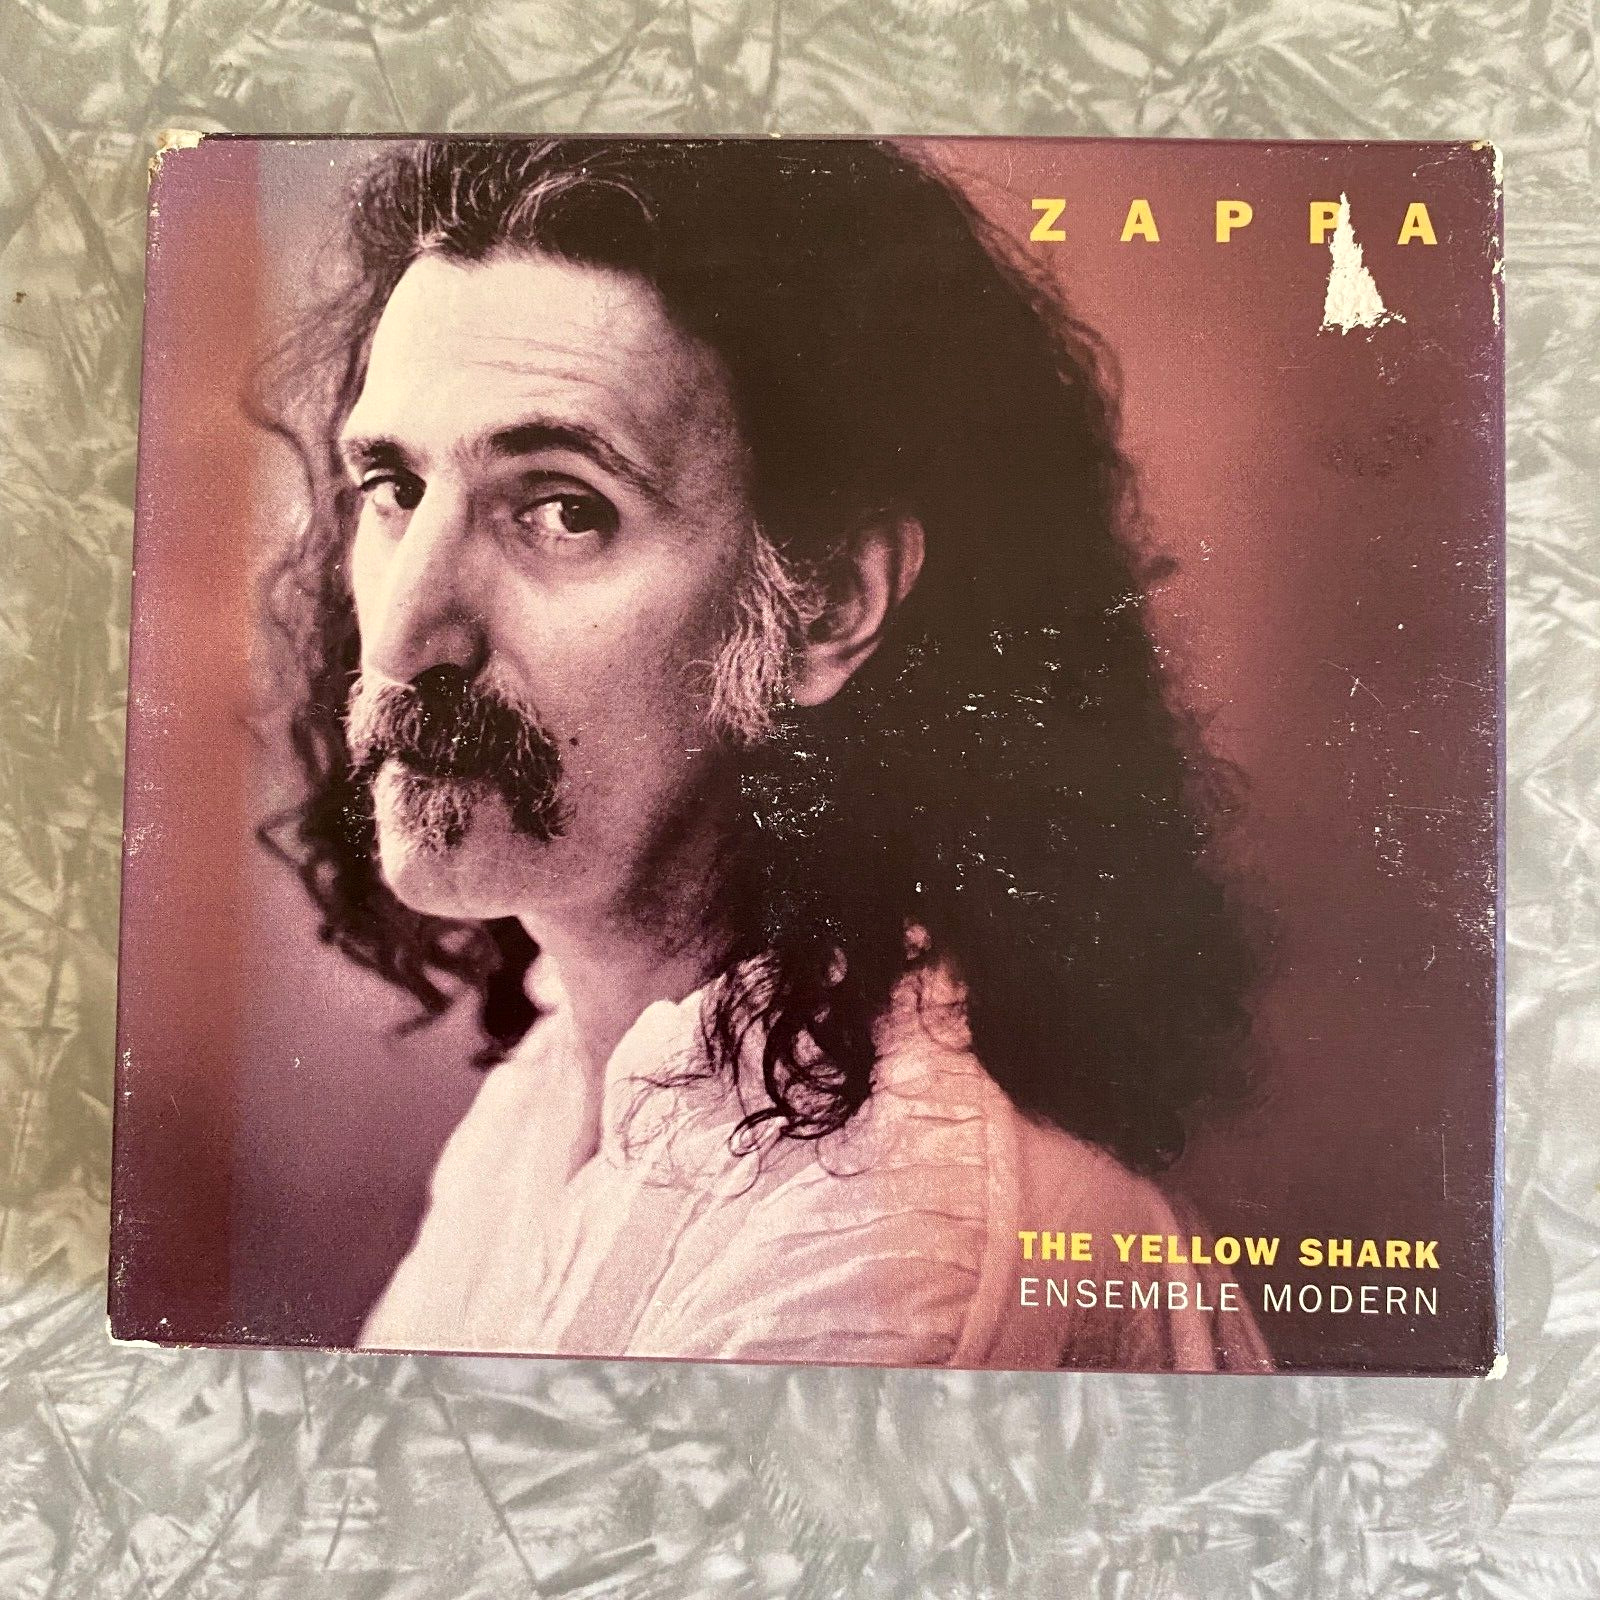 Frank Zappa The Yellow Shark Ensemble Modern CD w/ Booklet Slipcover Clean Disc